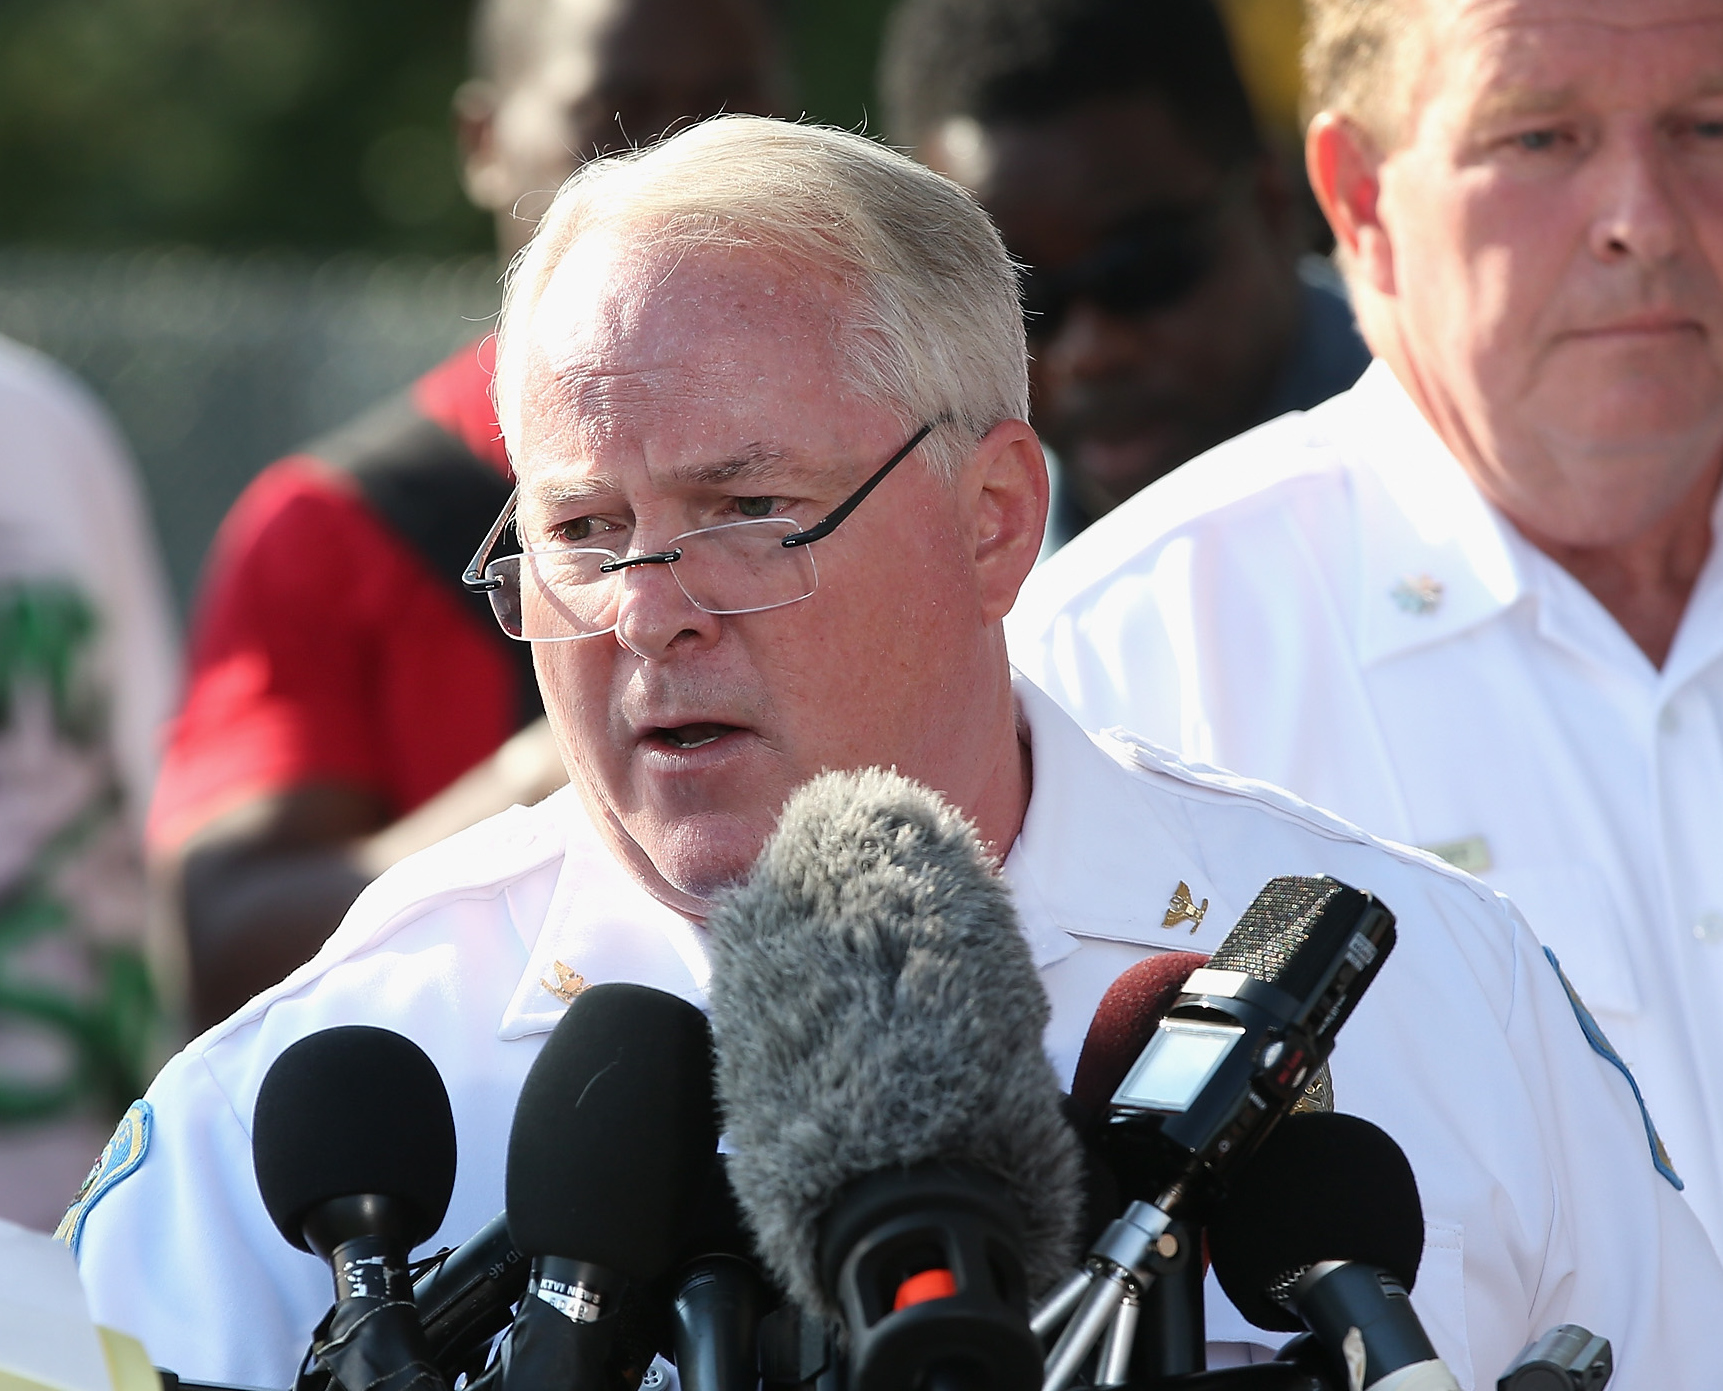 [VIDEO] Ferguson Police Chief Apologizes to Michael Brown’s Family